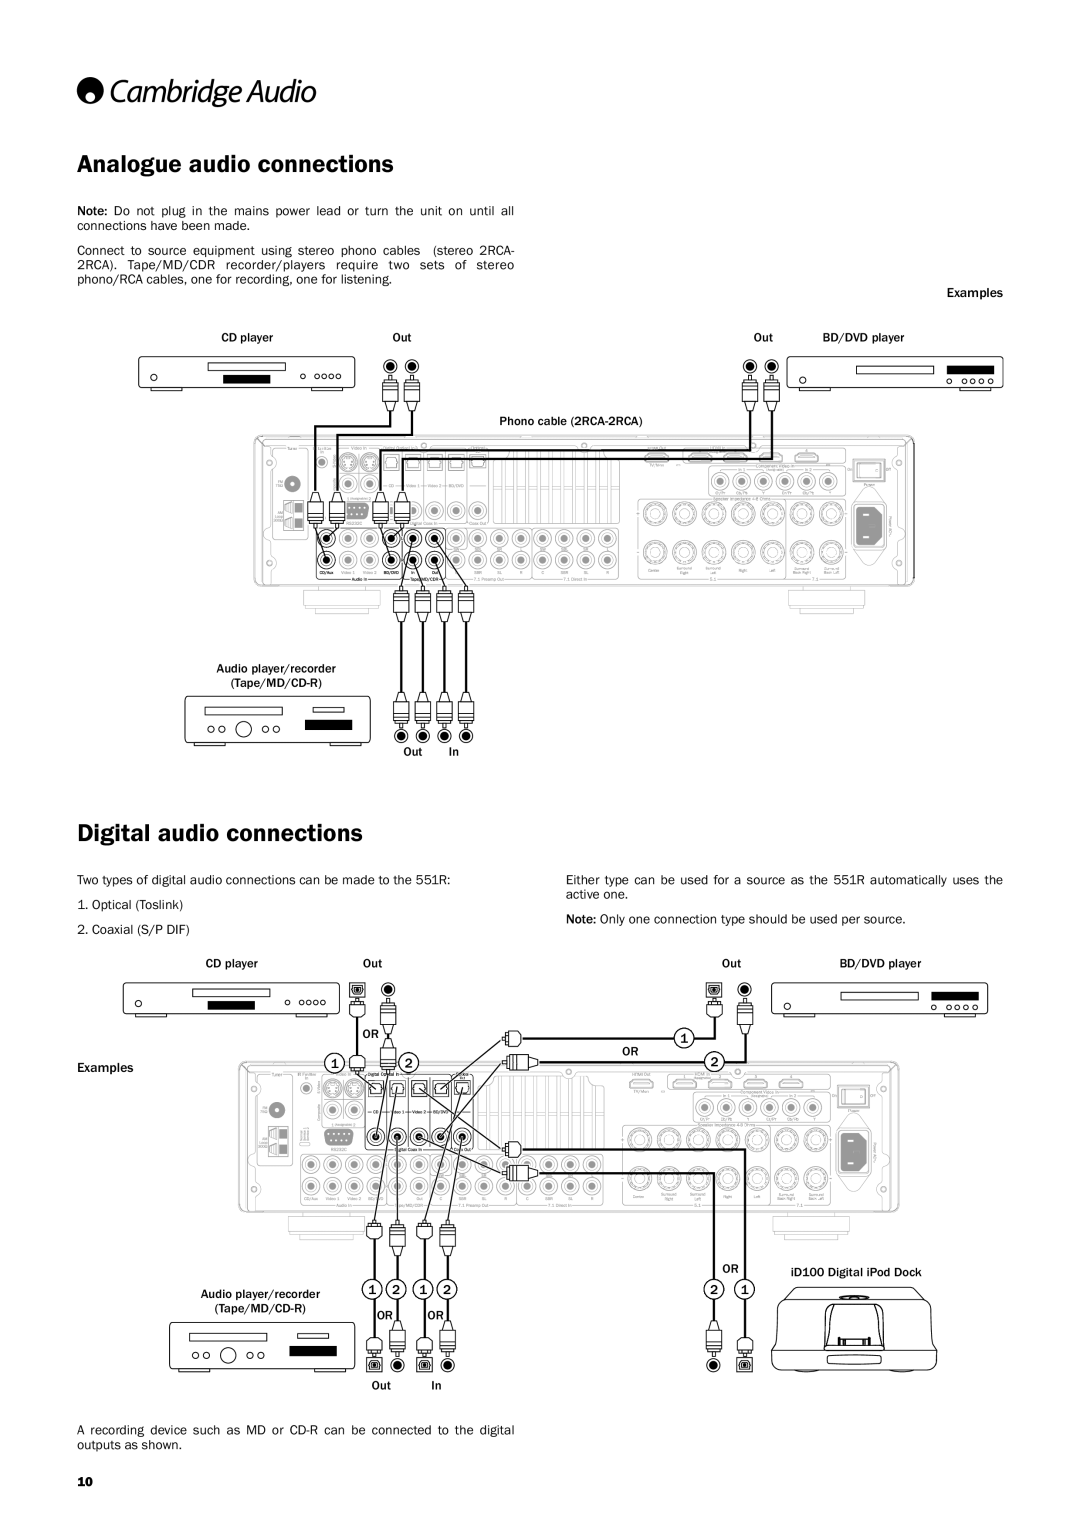 Cambridge Audio 551R user manual Analogueaudioconnections, Digitalaudioconnections 